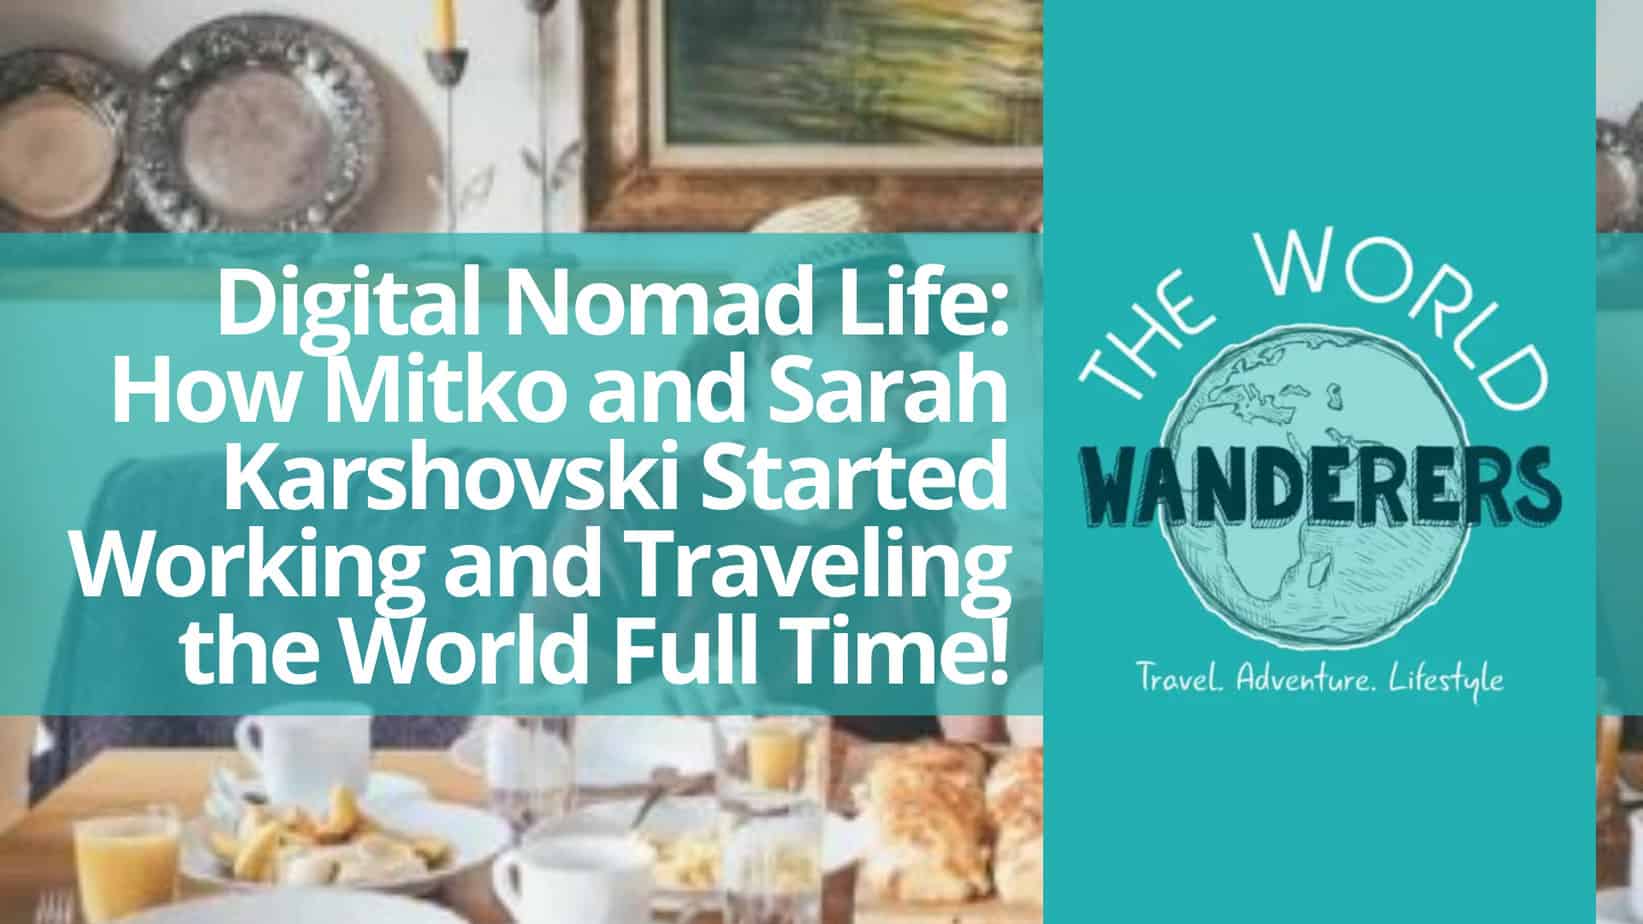 Digital Nomad Life How Mitko and Sarah Karshovski Started Working and Traveling the World Full Time!